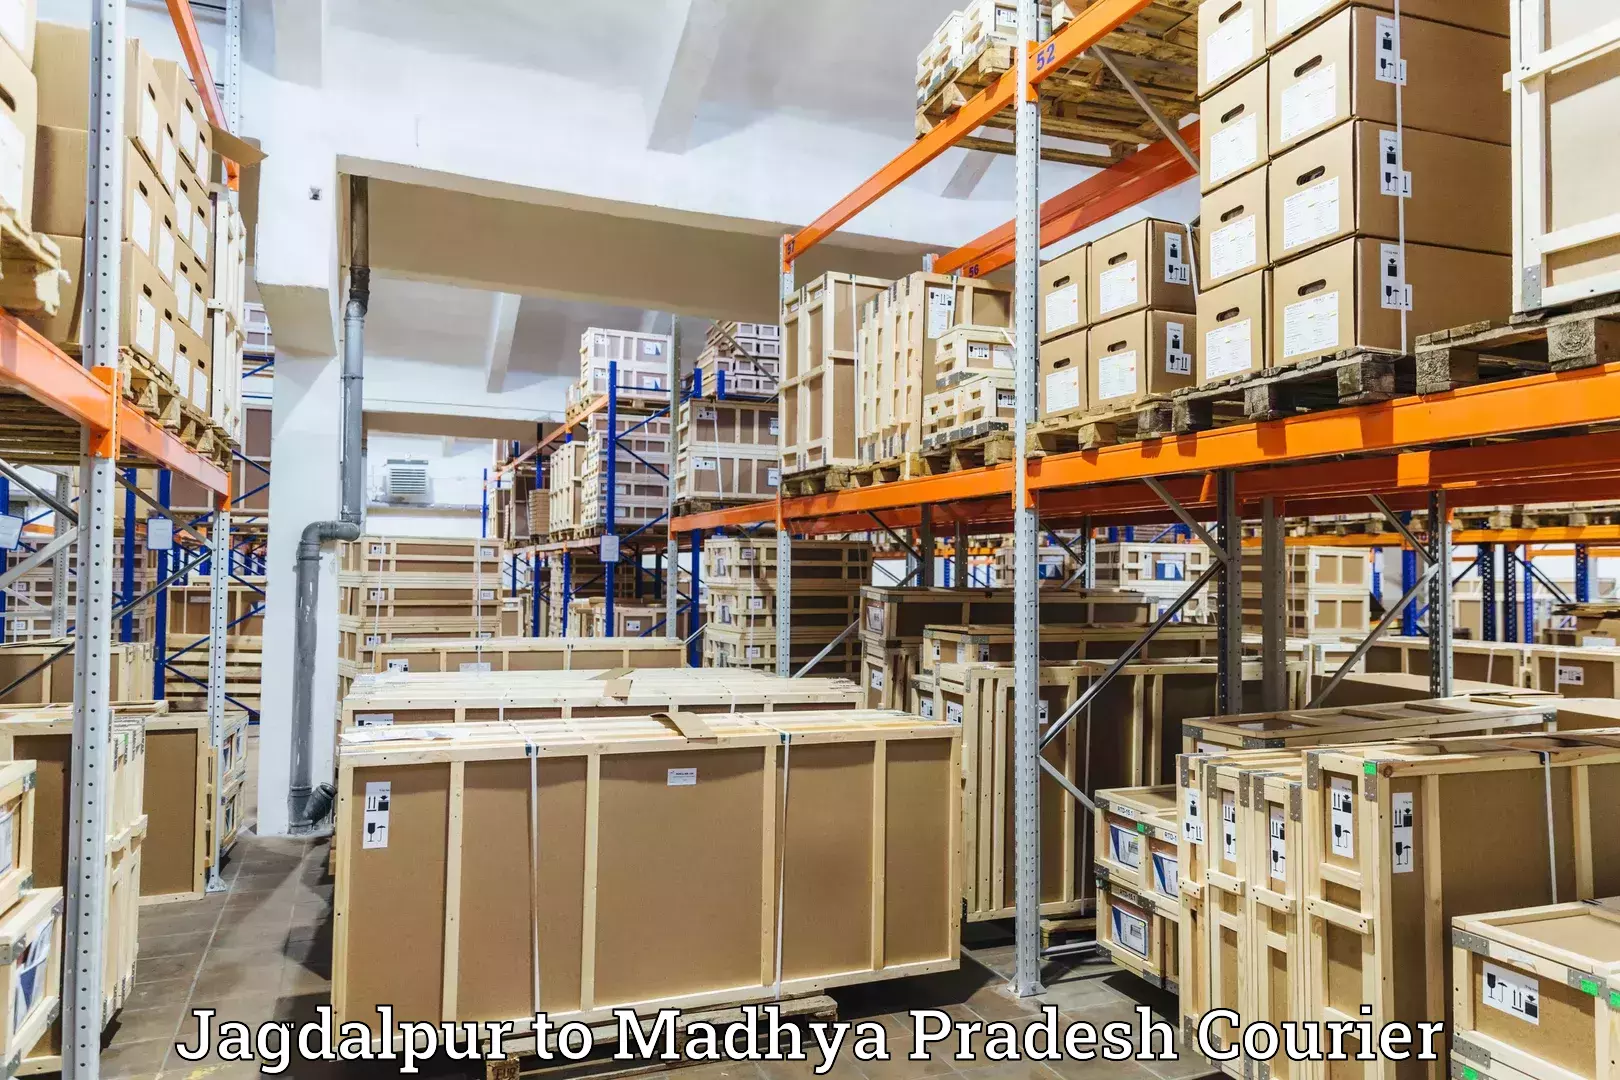 Courier service innovation Jagdalpur to Harda